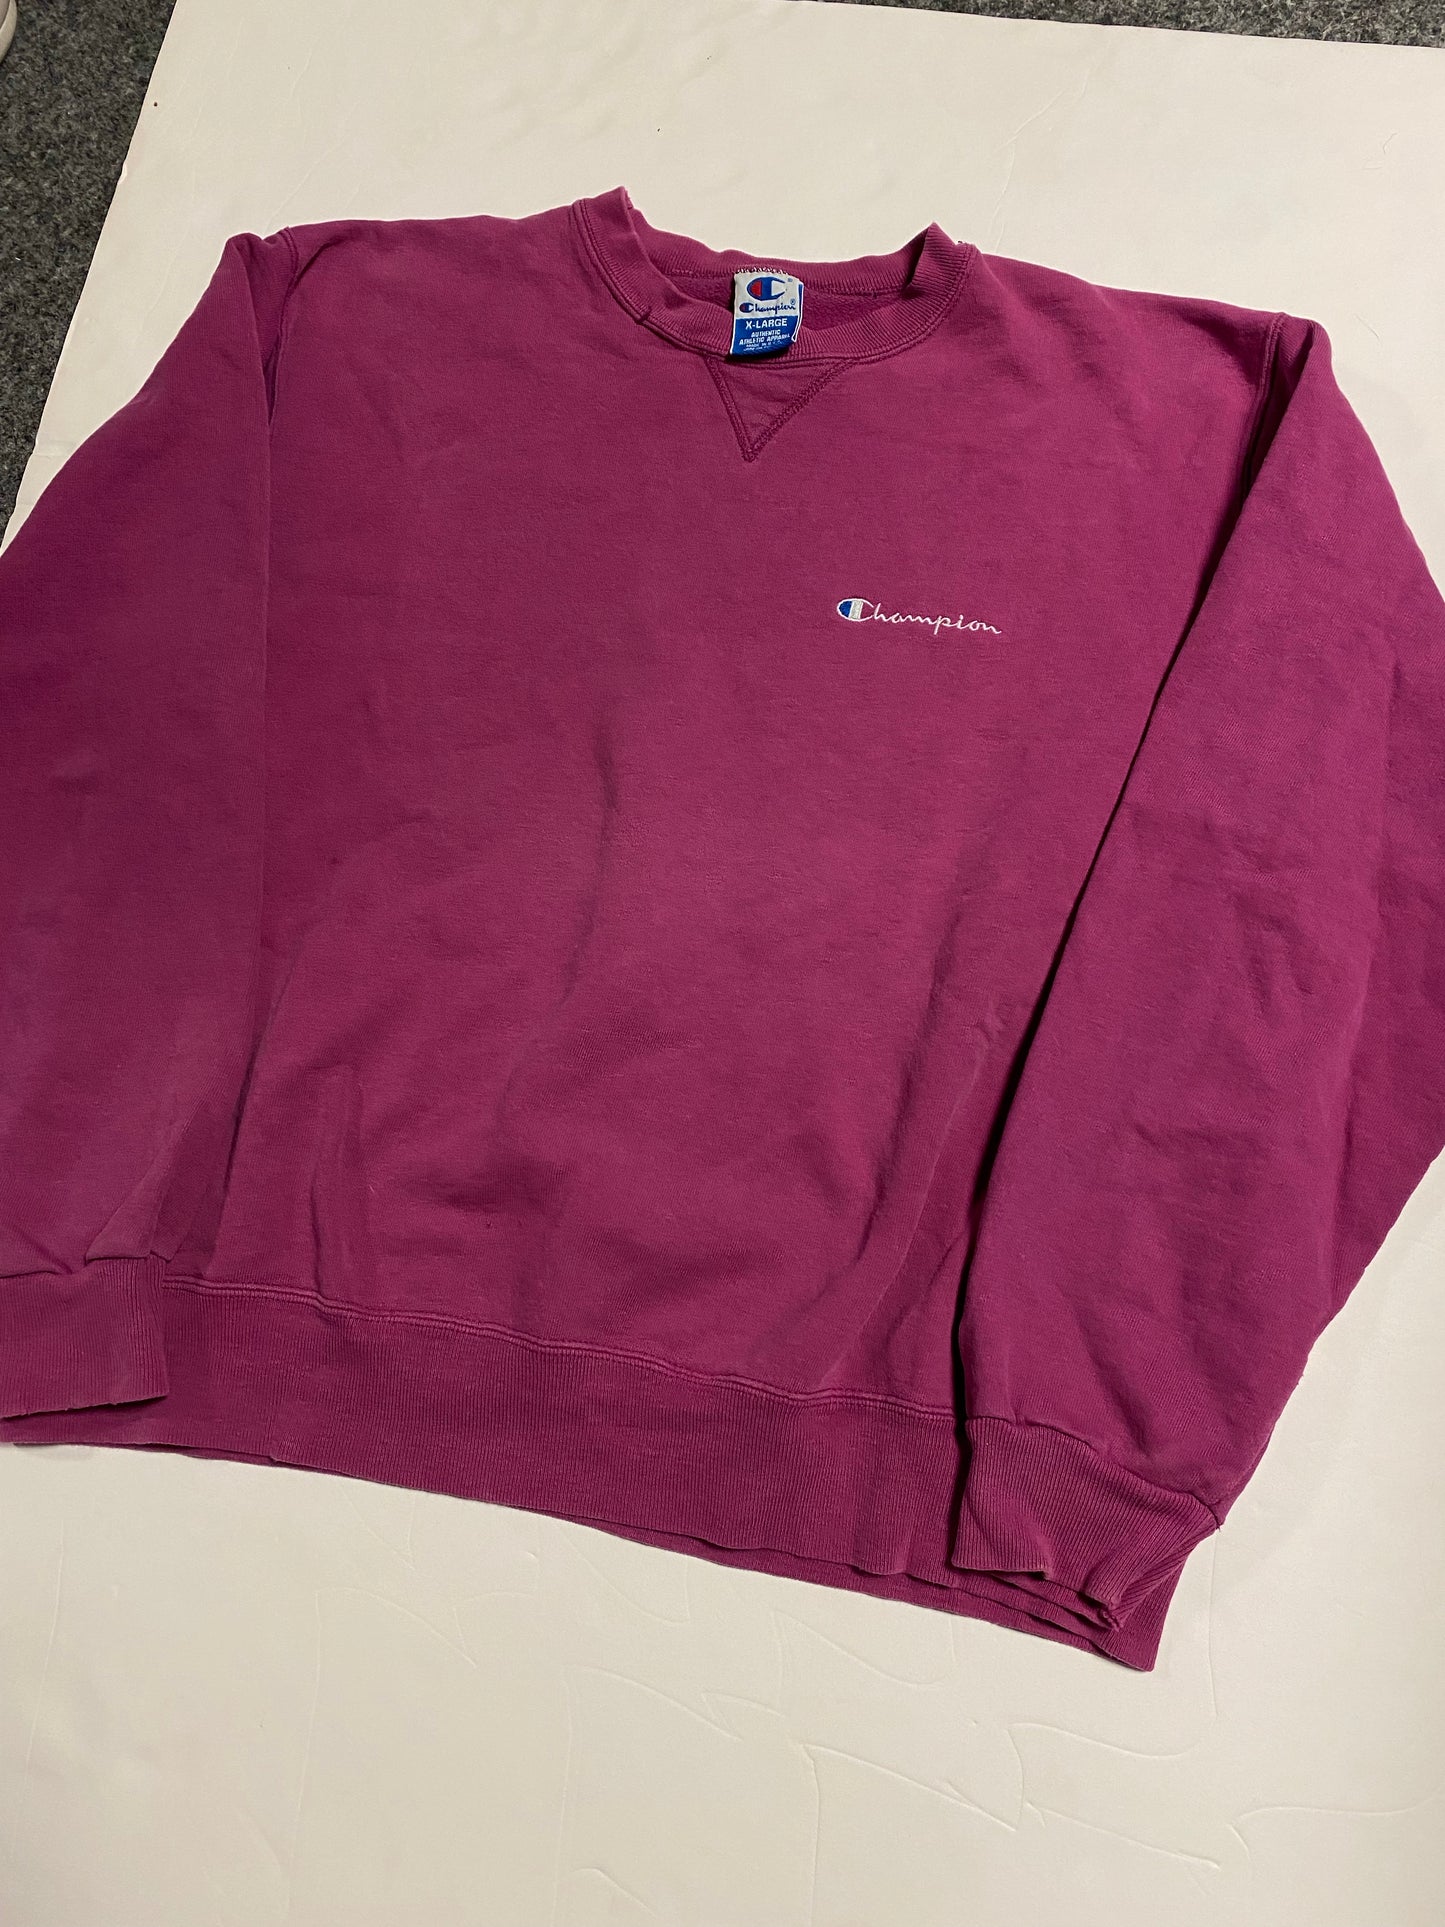 Vintage 90’s Champion Spellout Sweatshirt